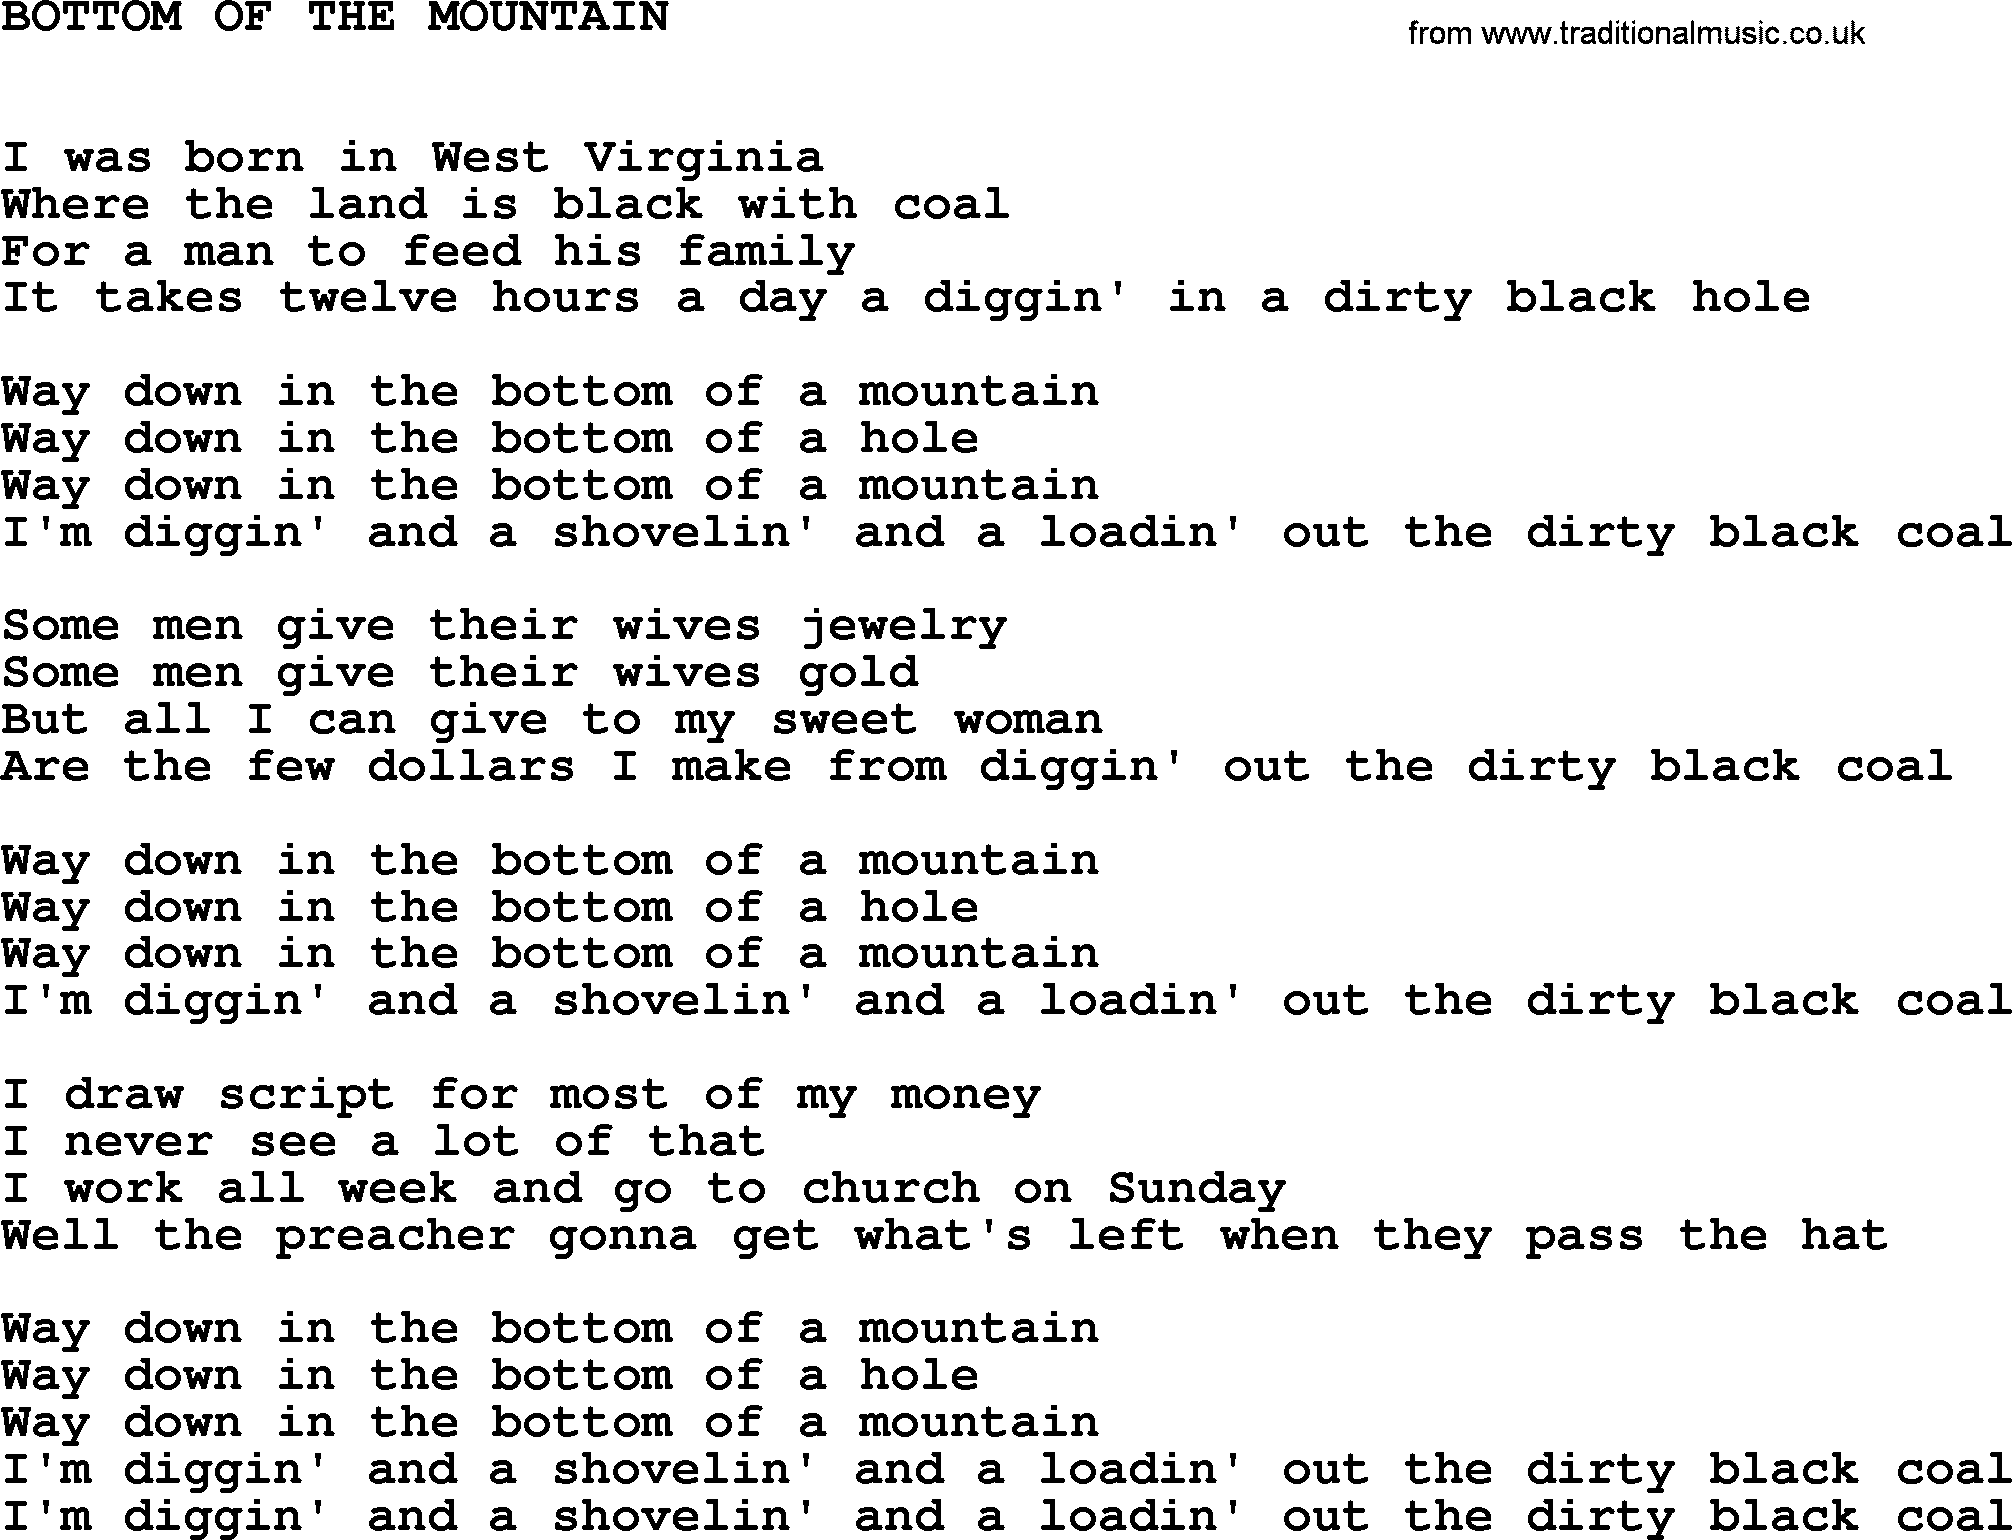 Johnny Cash song Bottom Of The Mountain.txt lyrics